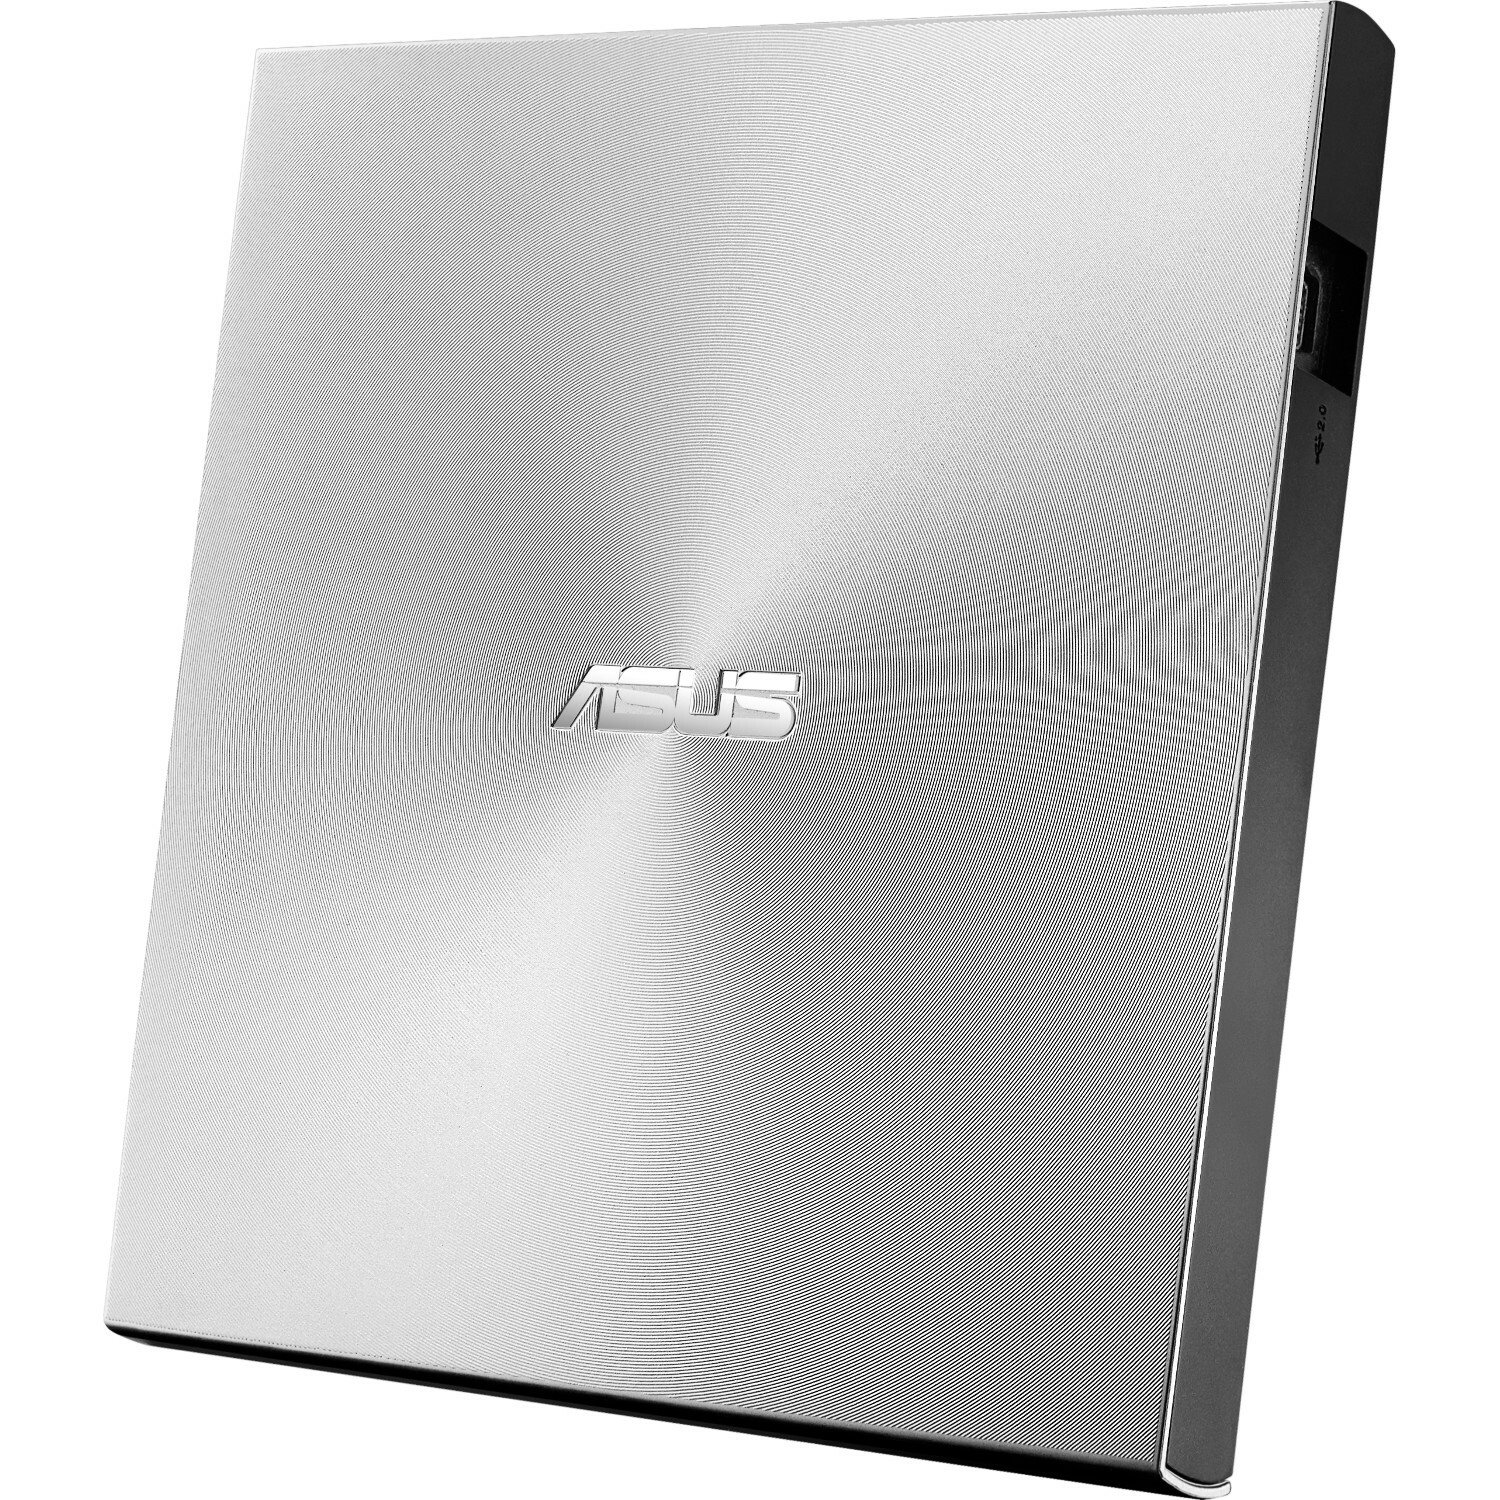 Asus ZenDrive DVD-Writer - External - Retail Pack - Silver